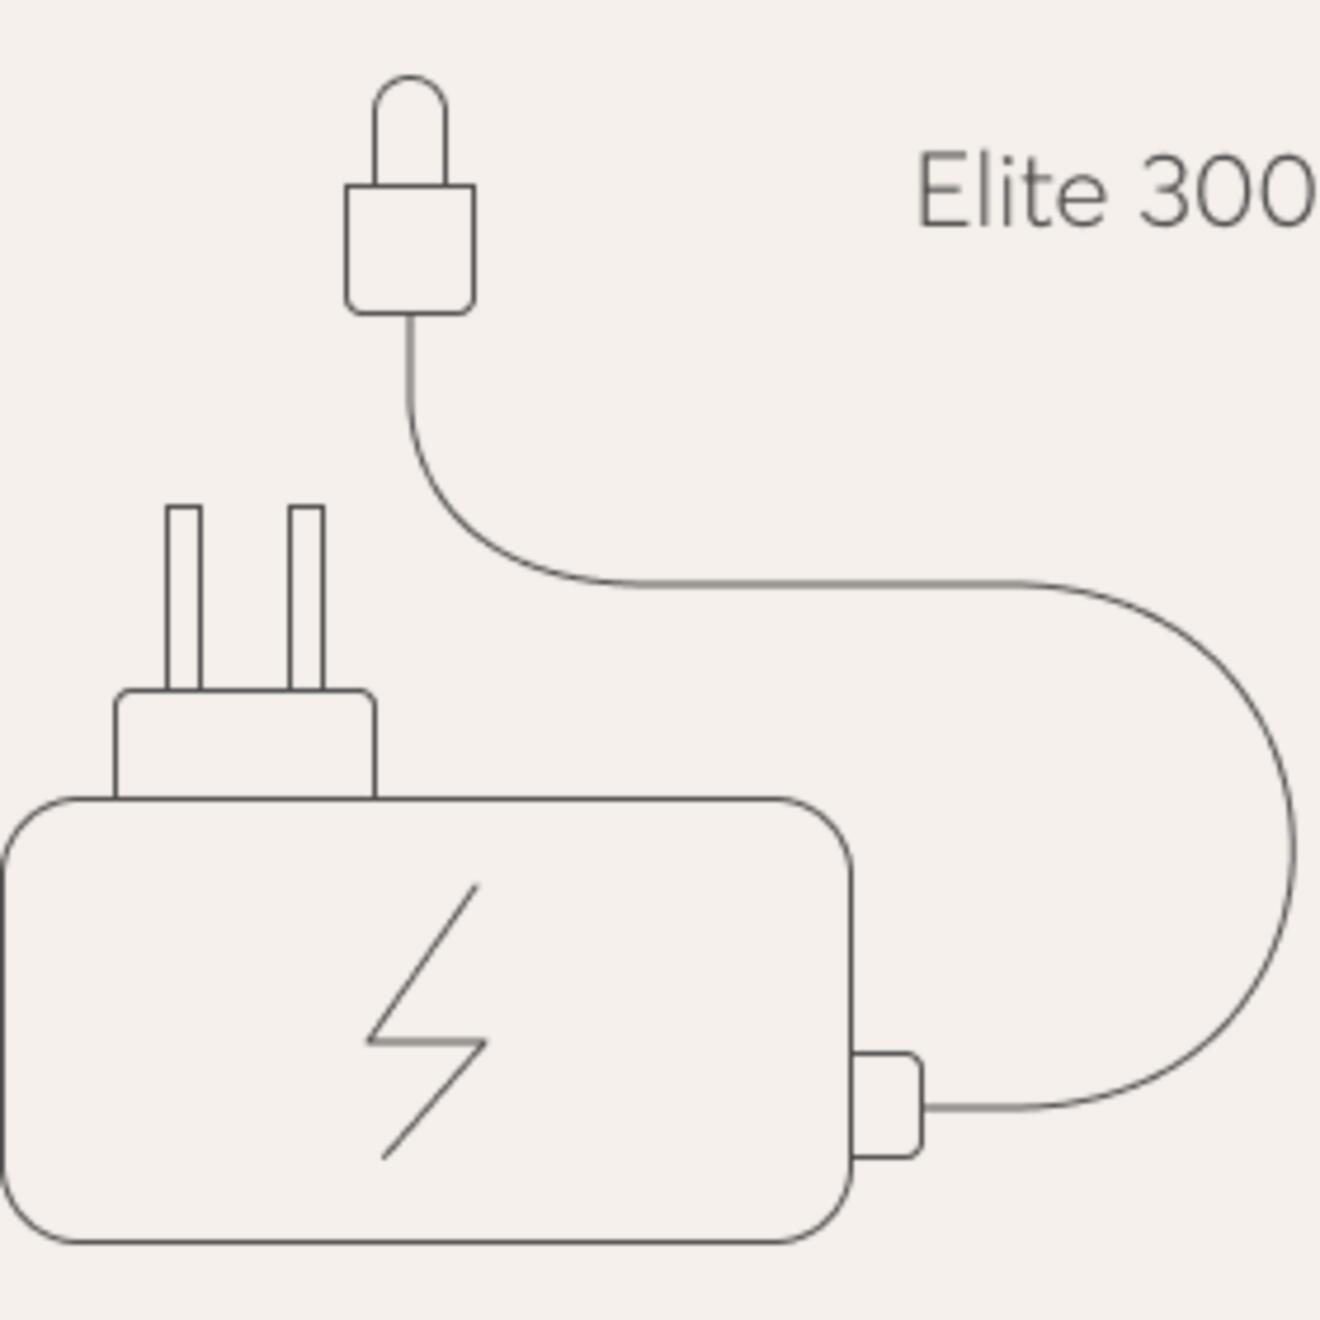 Bodyclock Elite 300 / Advanced 200 mains power adaptor photo